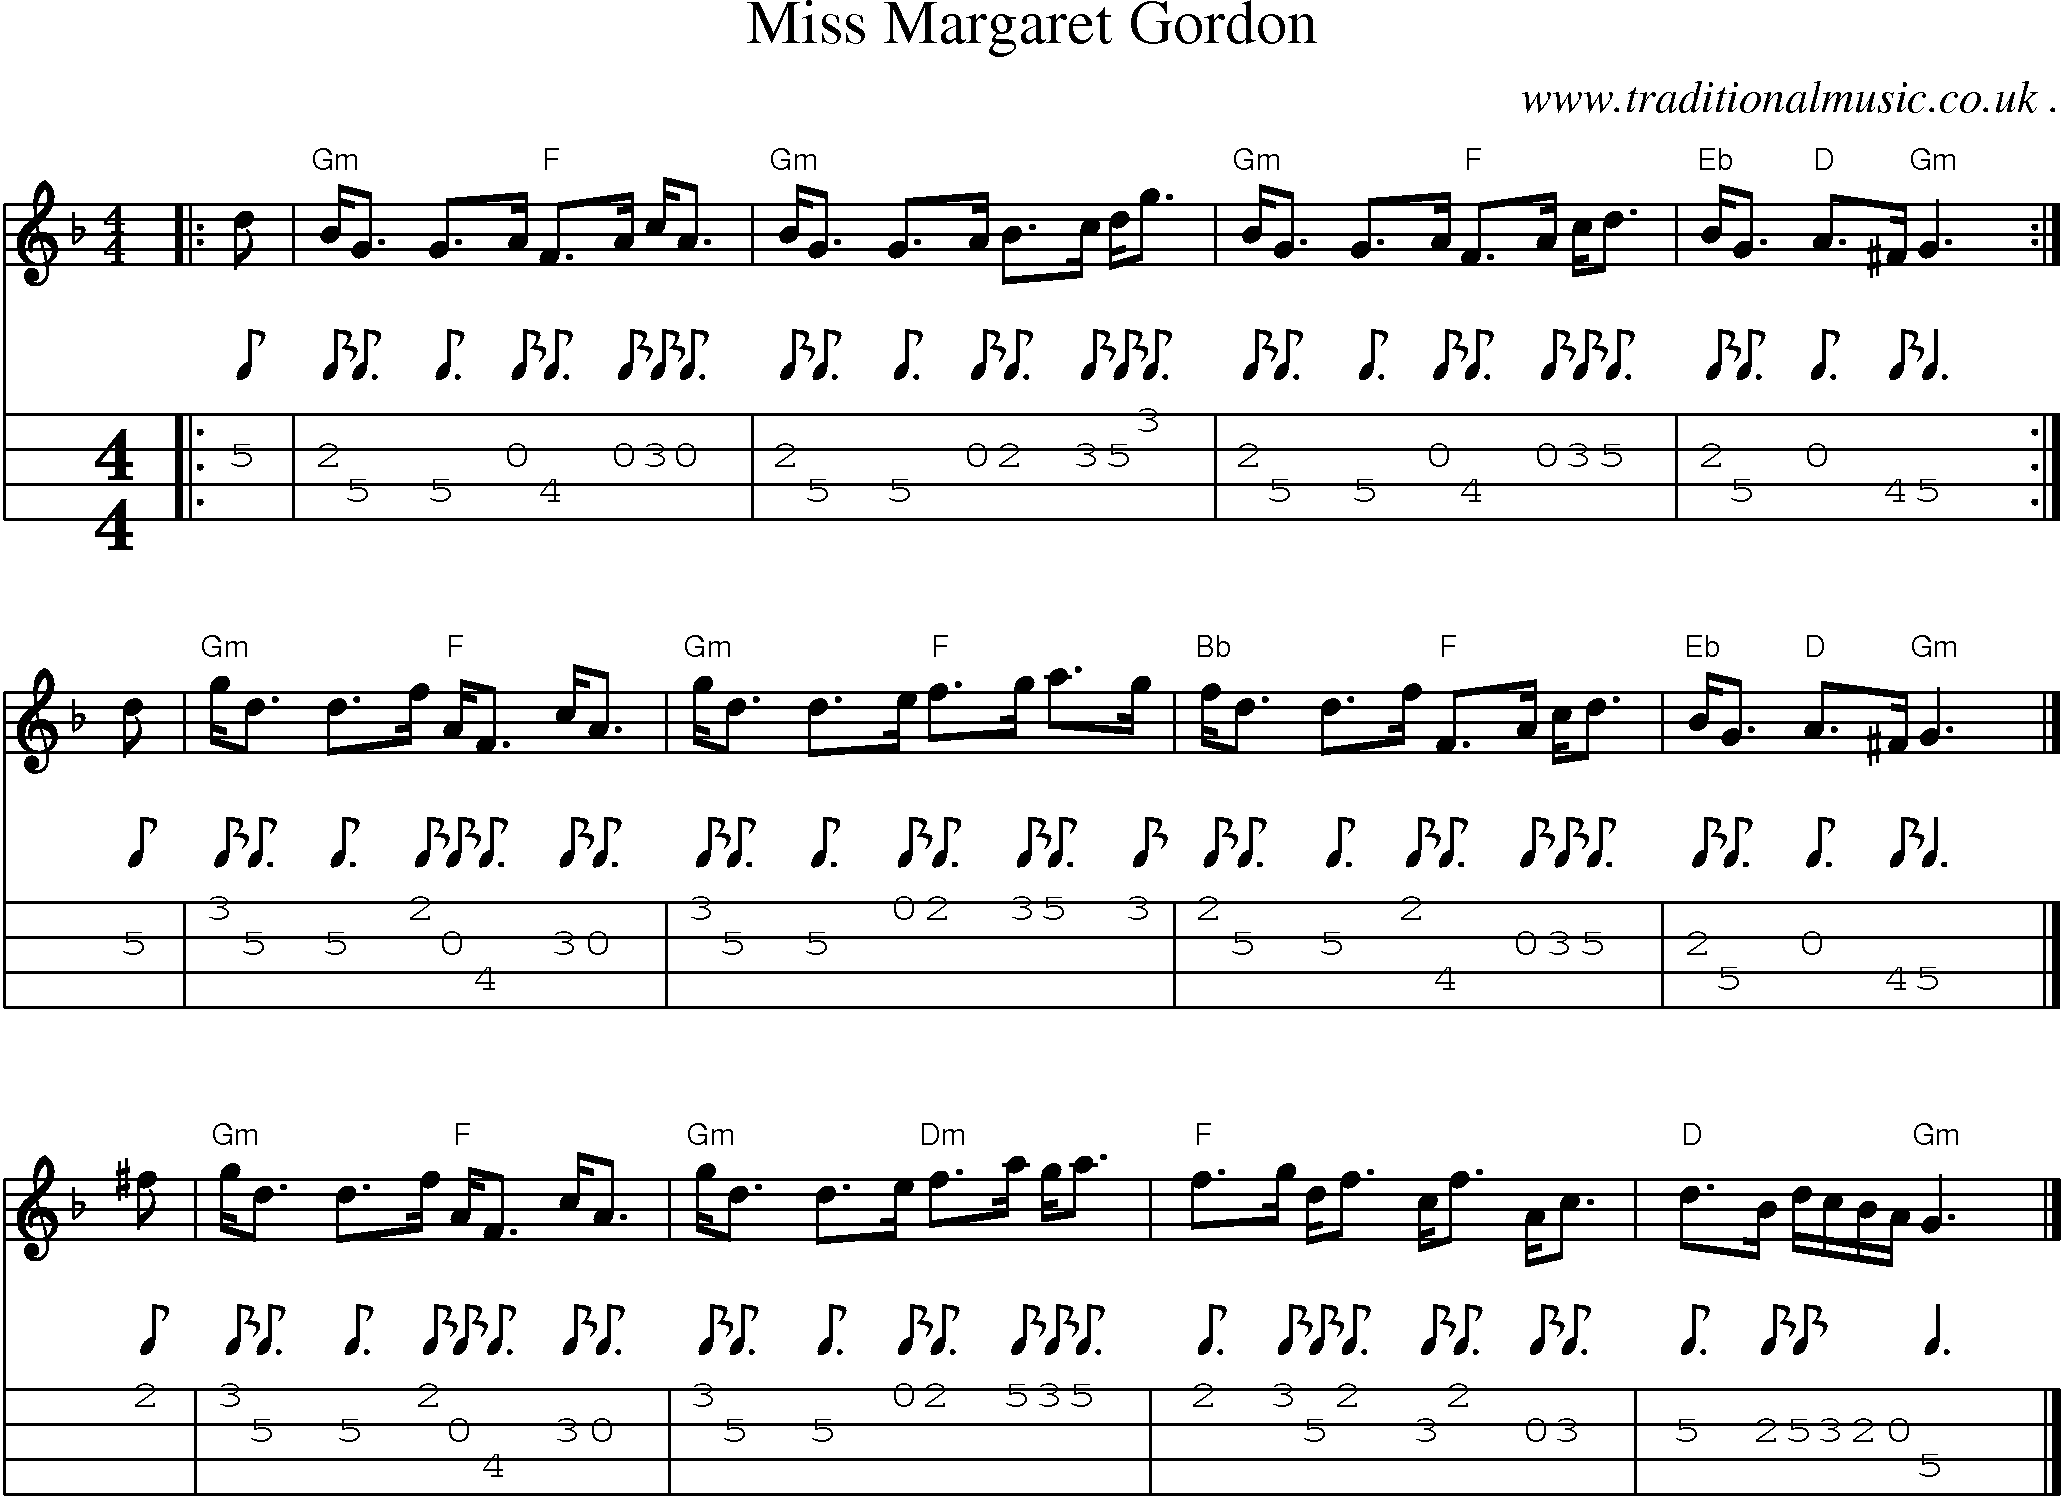 Sheet-music  score, Chords and Mandolin Tabs for Miss Margaret Gordon